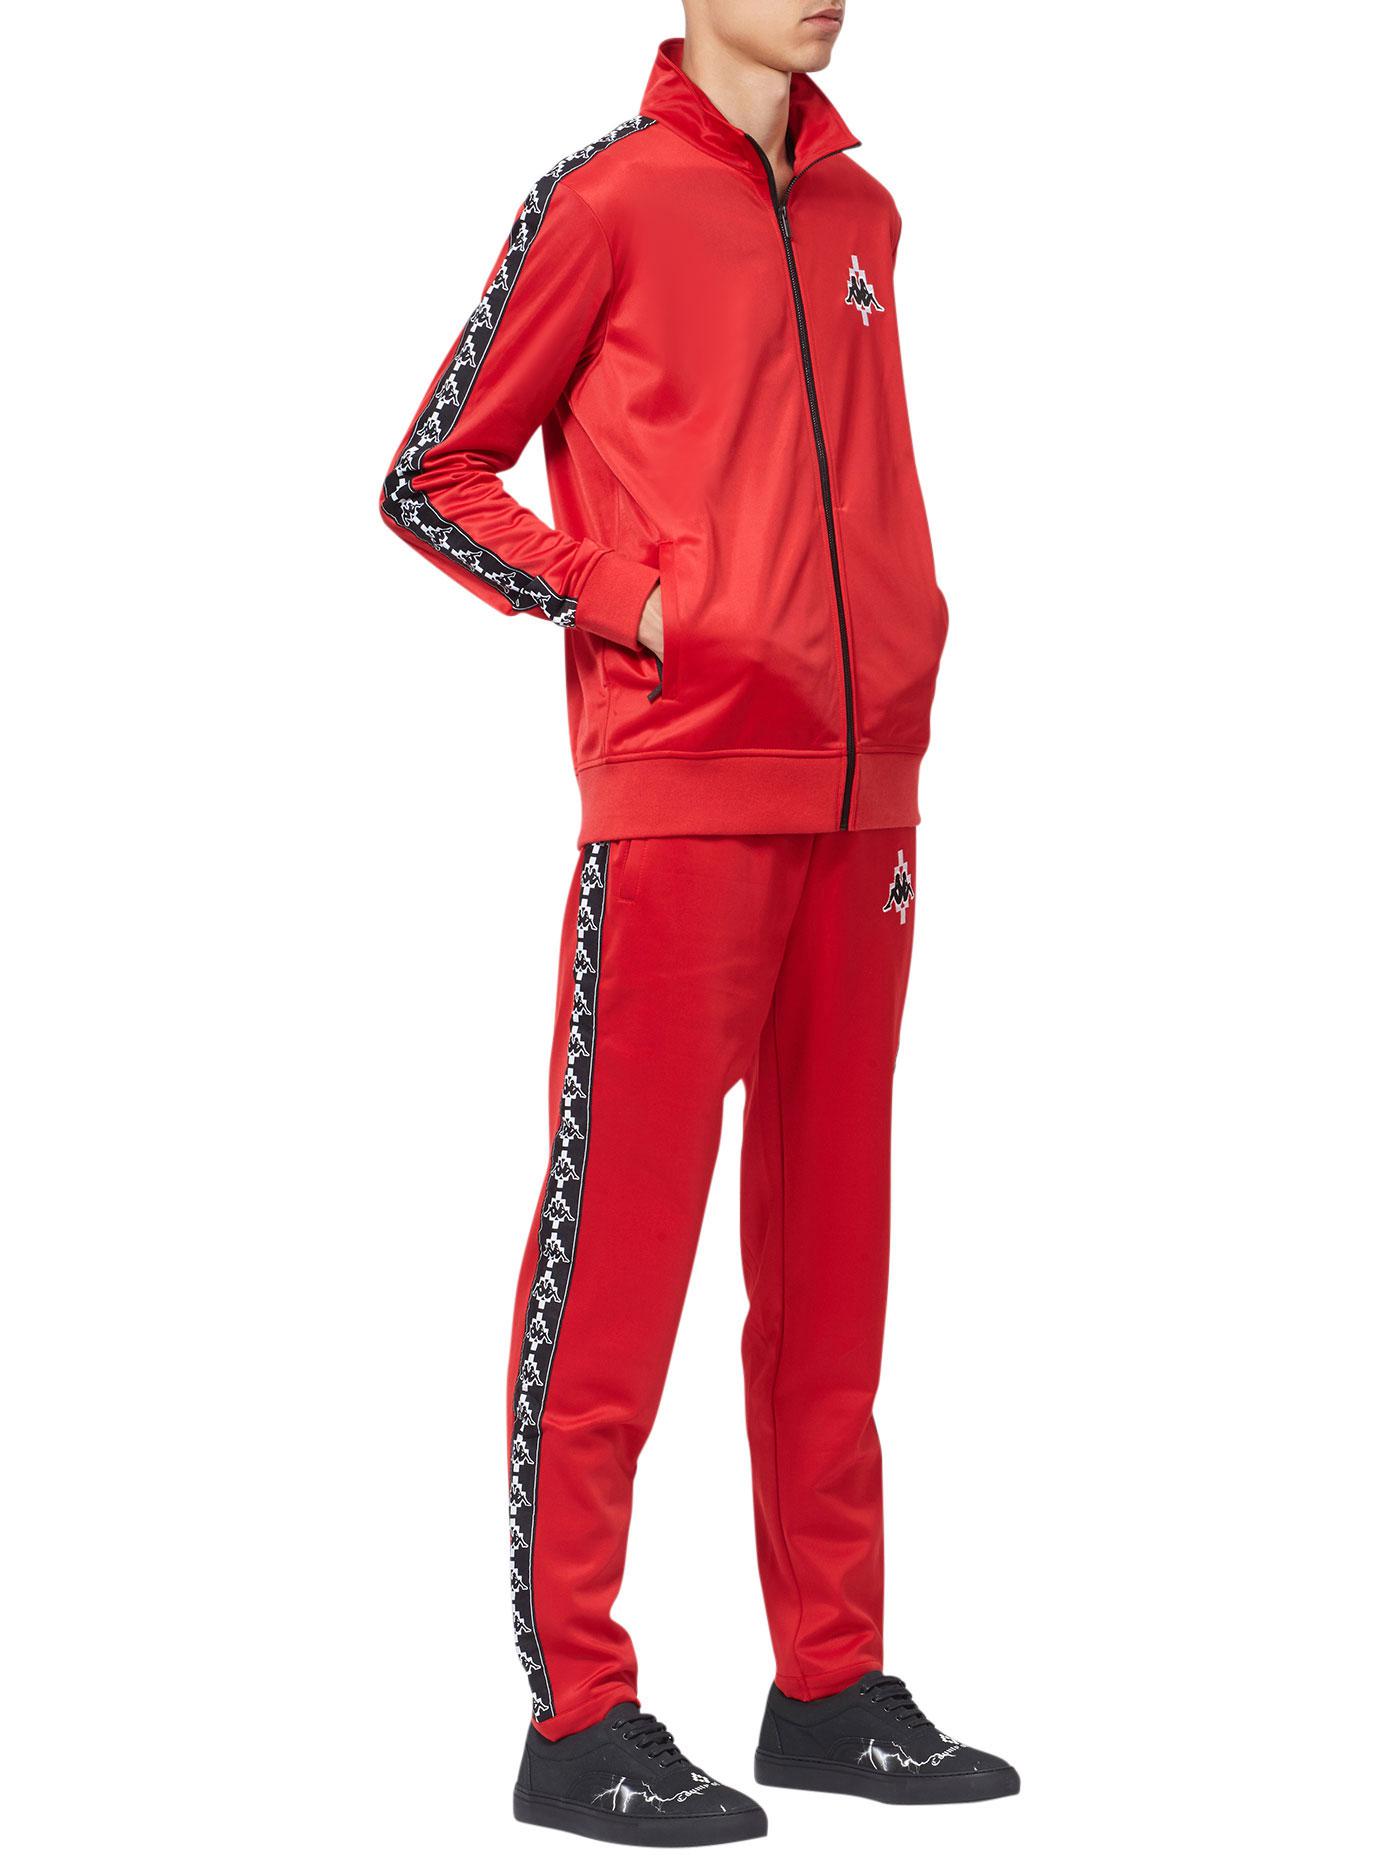 Lyst - Marcelo Burlon Kappa Tracksuit Jacket in Red for Men